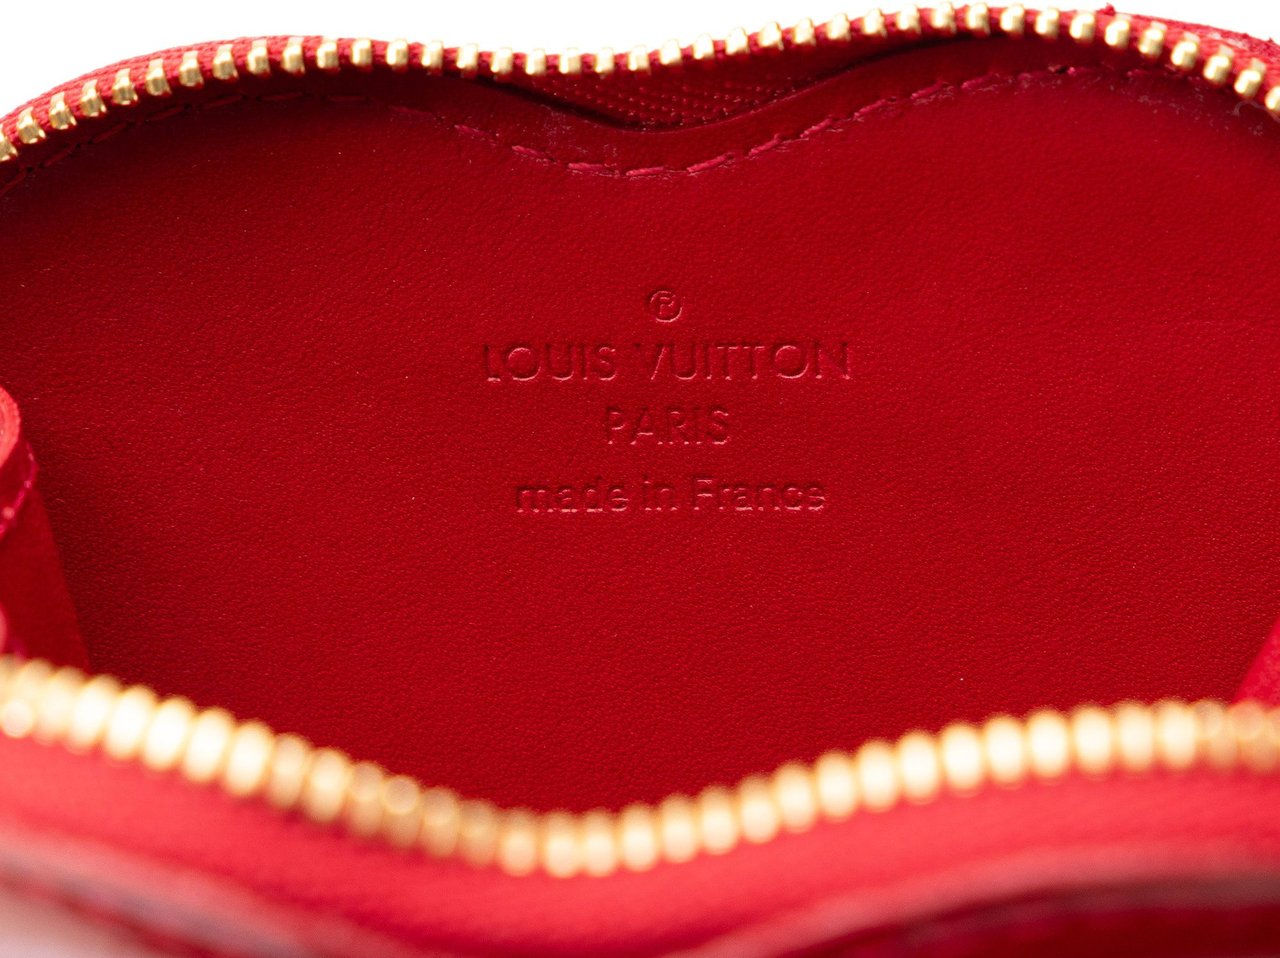 Louis Vuitton Monogram Vernis Heart Coin Purse Rood